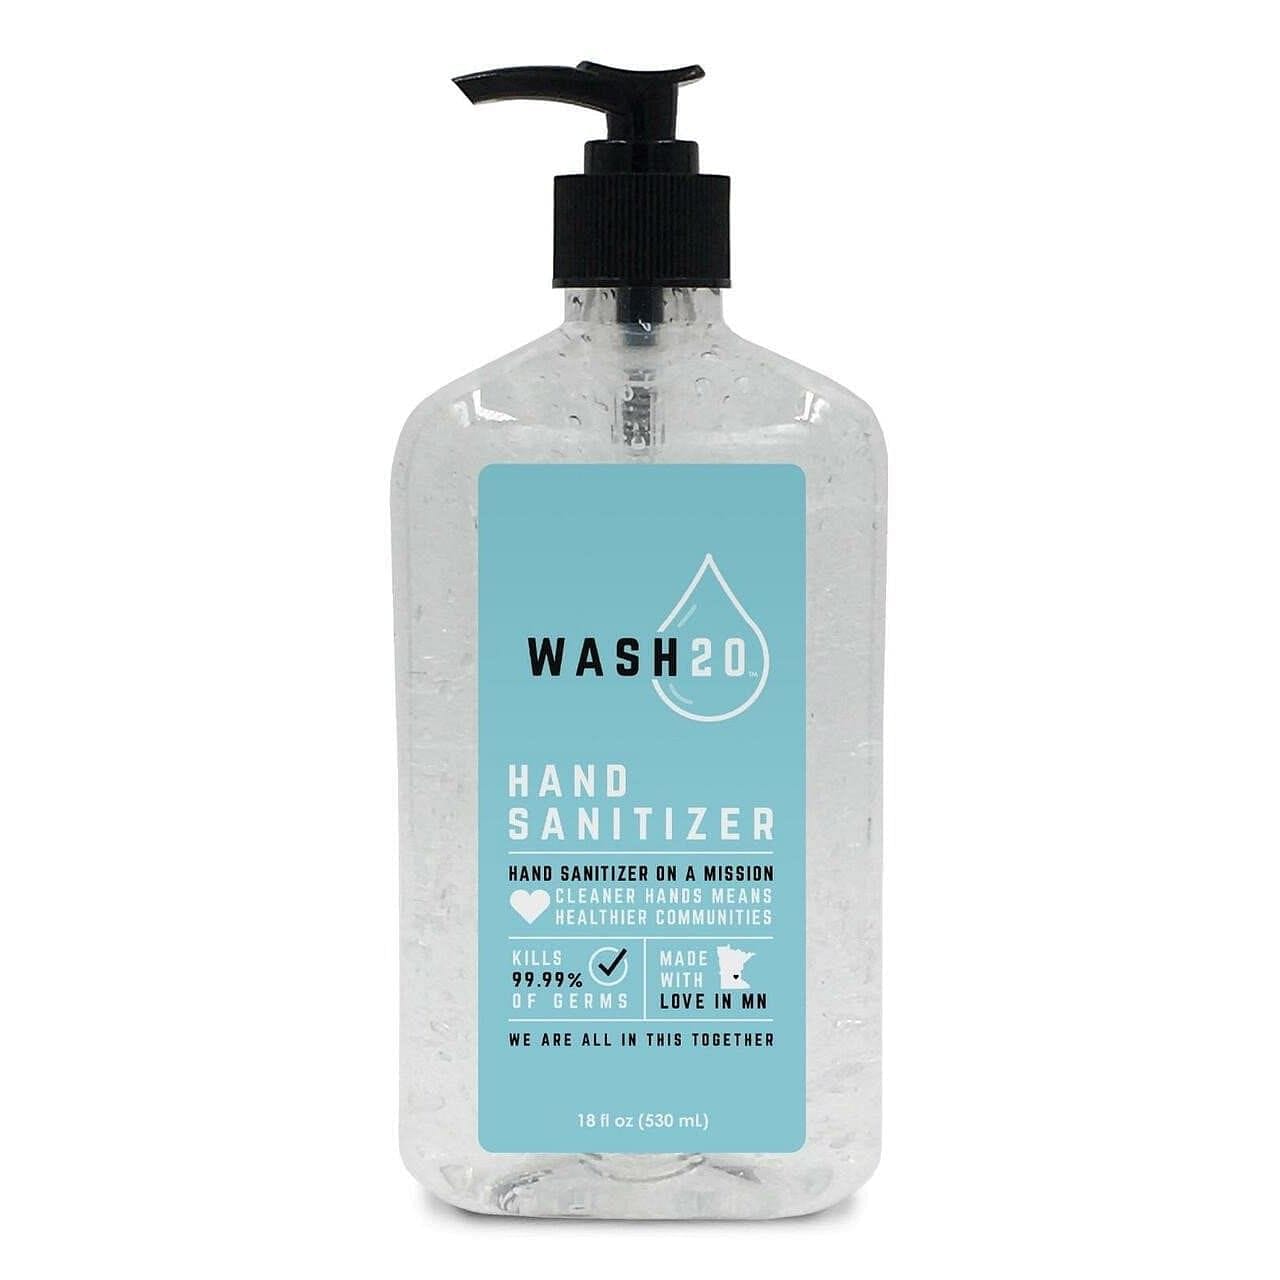 WASH20 Hand Sanitizer - Goldy TV